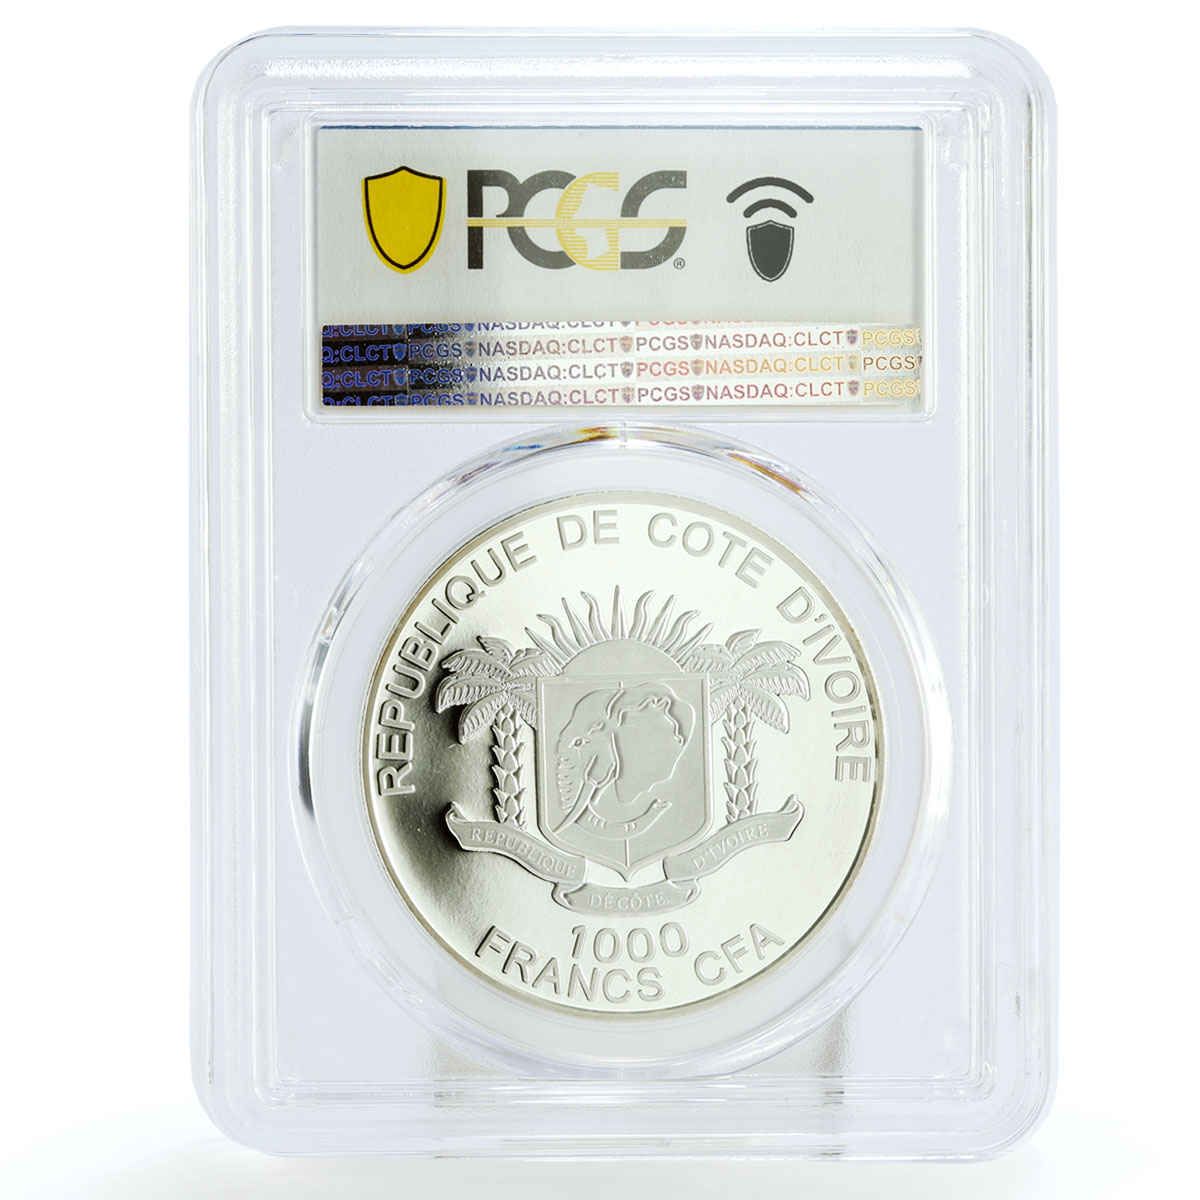 Ivory Coast 1000 francs Canonization Mother Teresa PR69 PCGS silver coin 2016